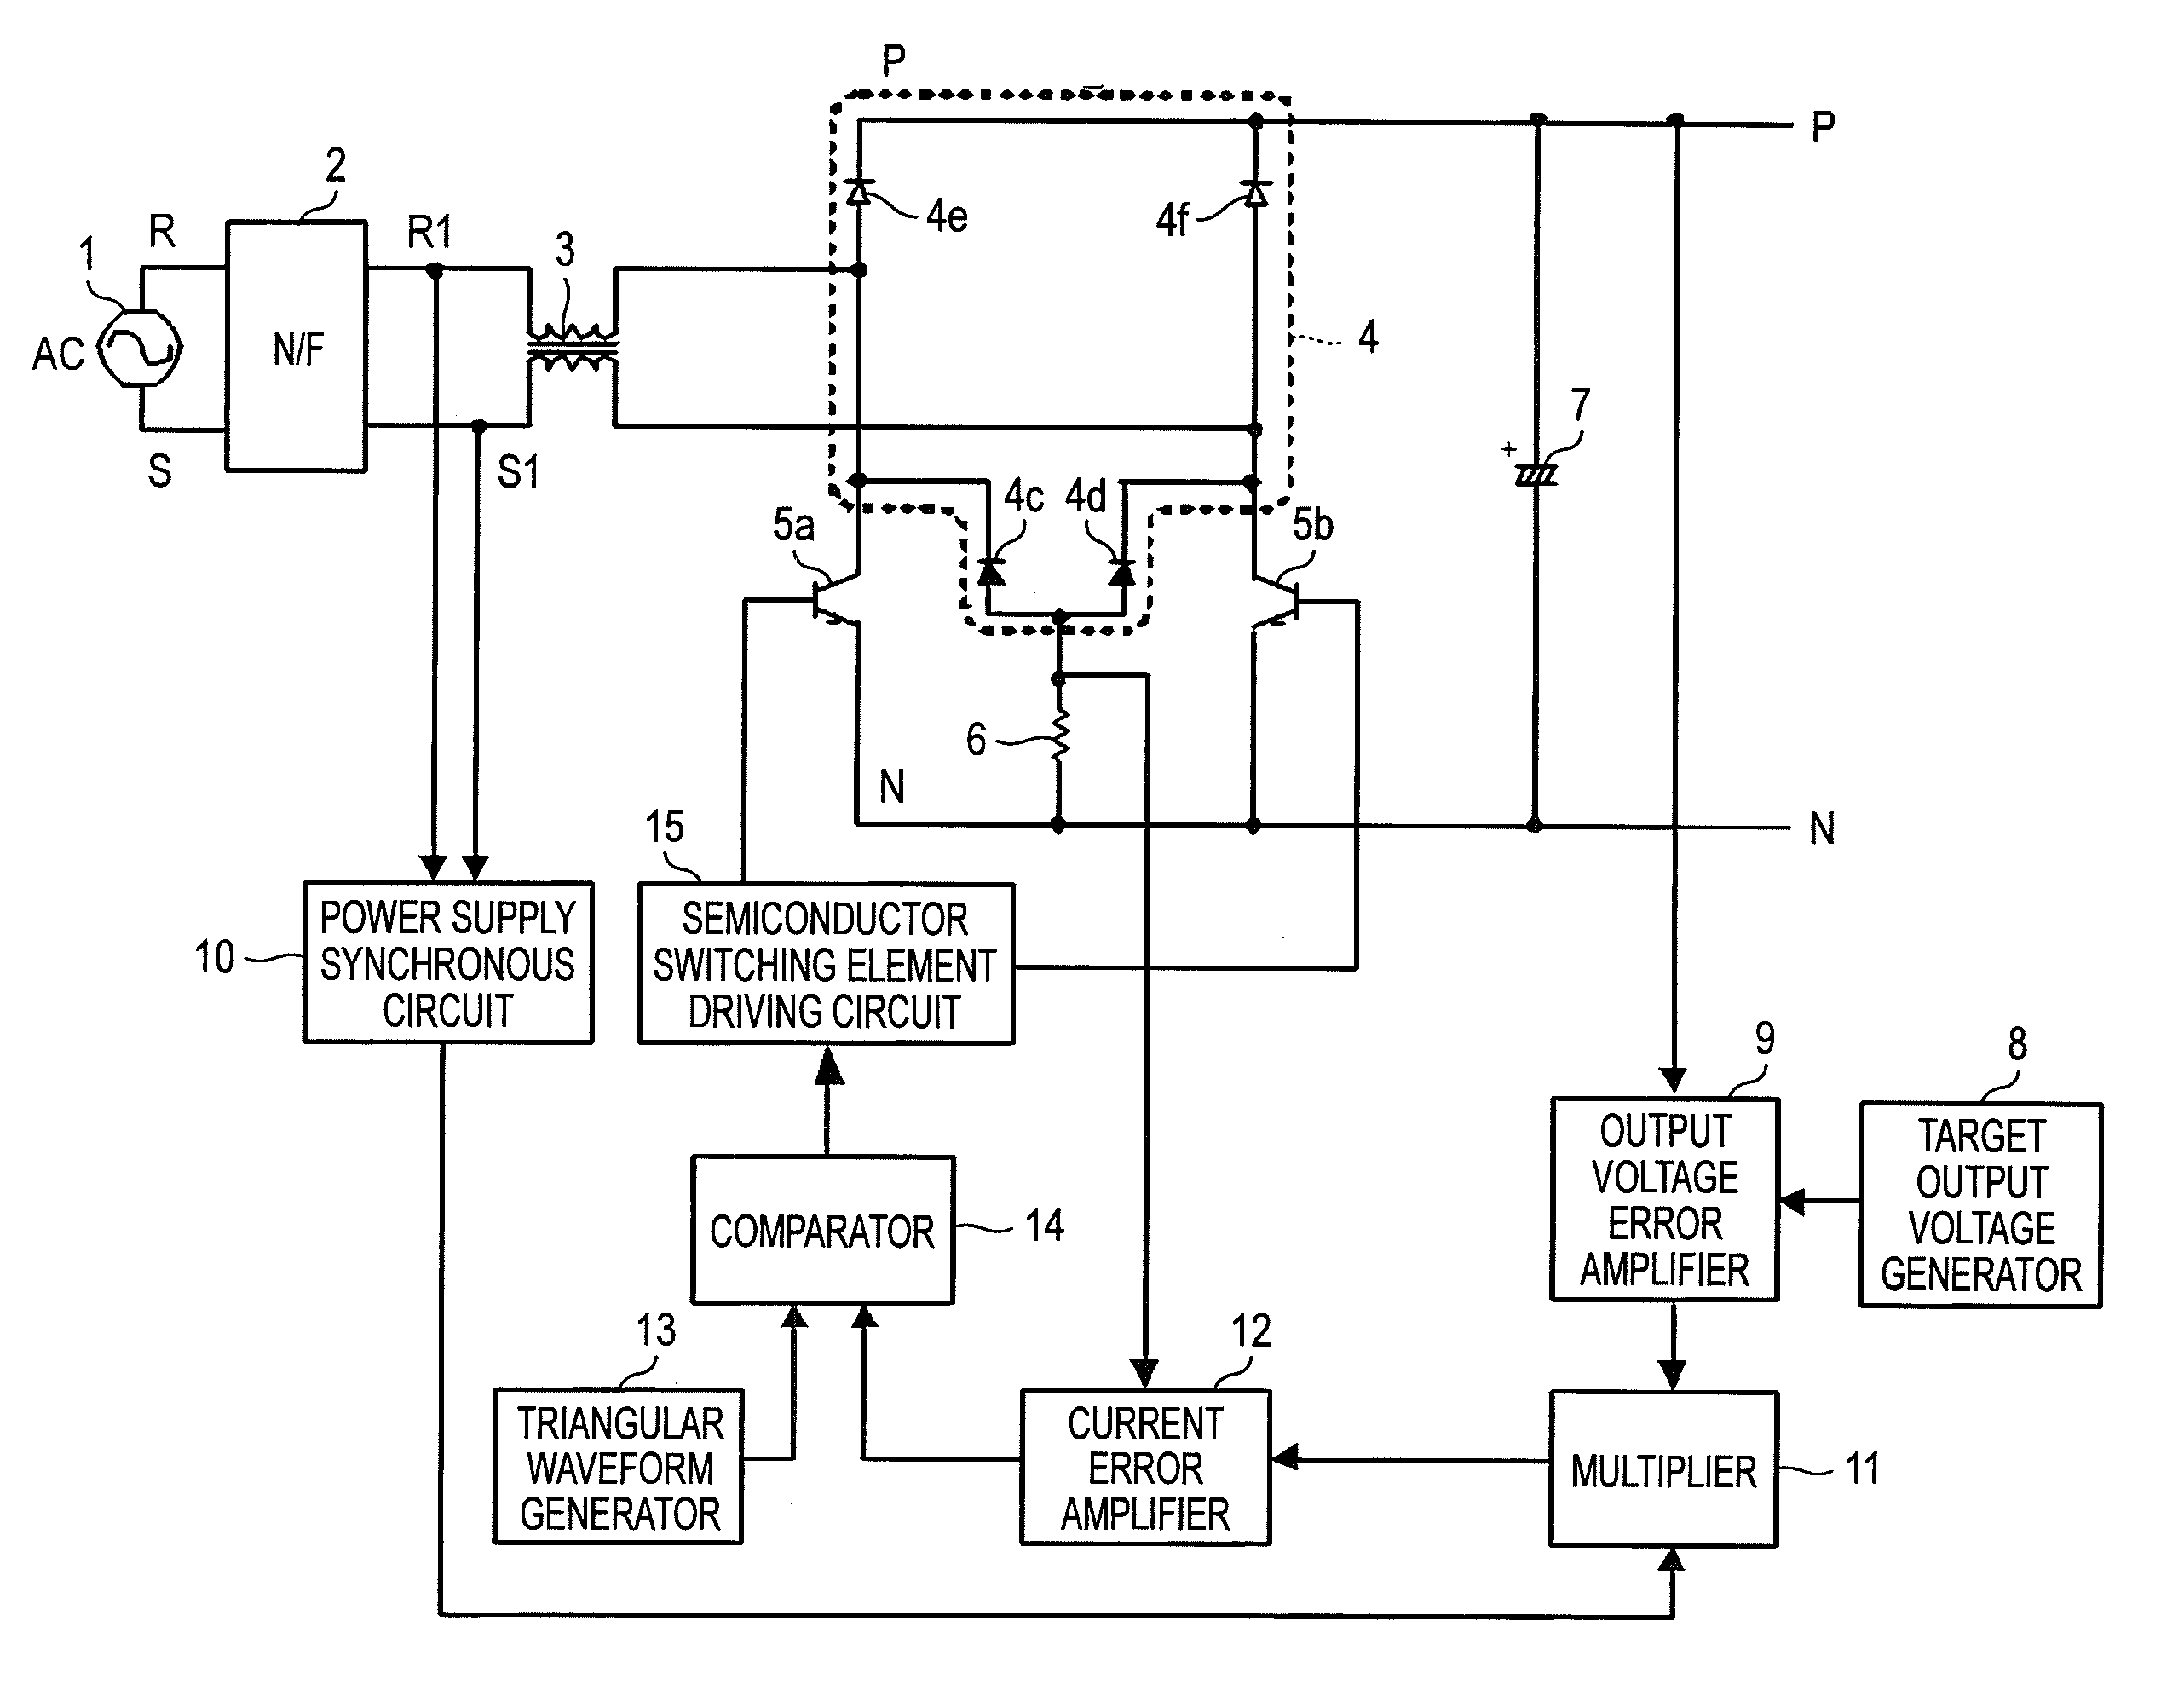 DC power supply apparatus